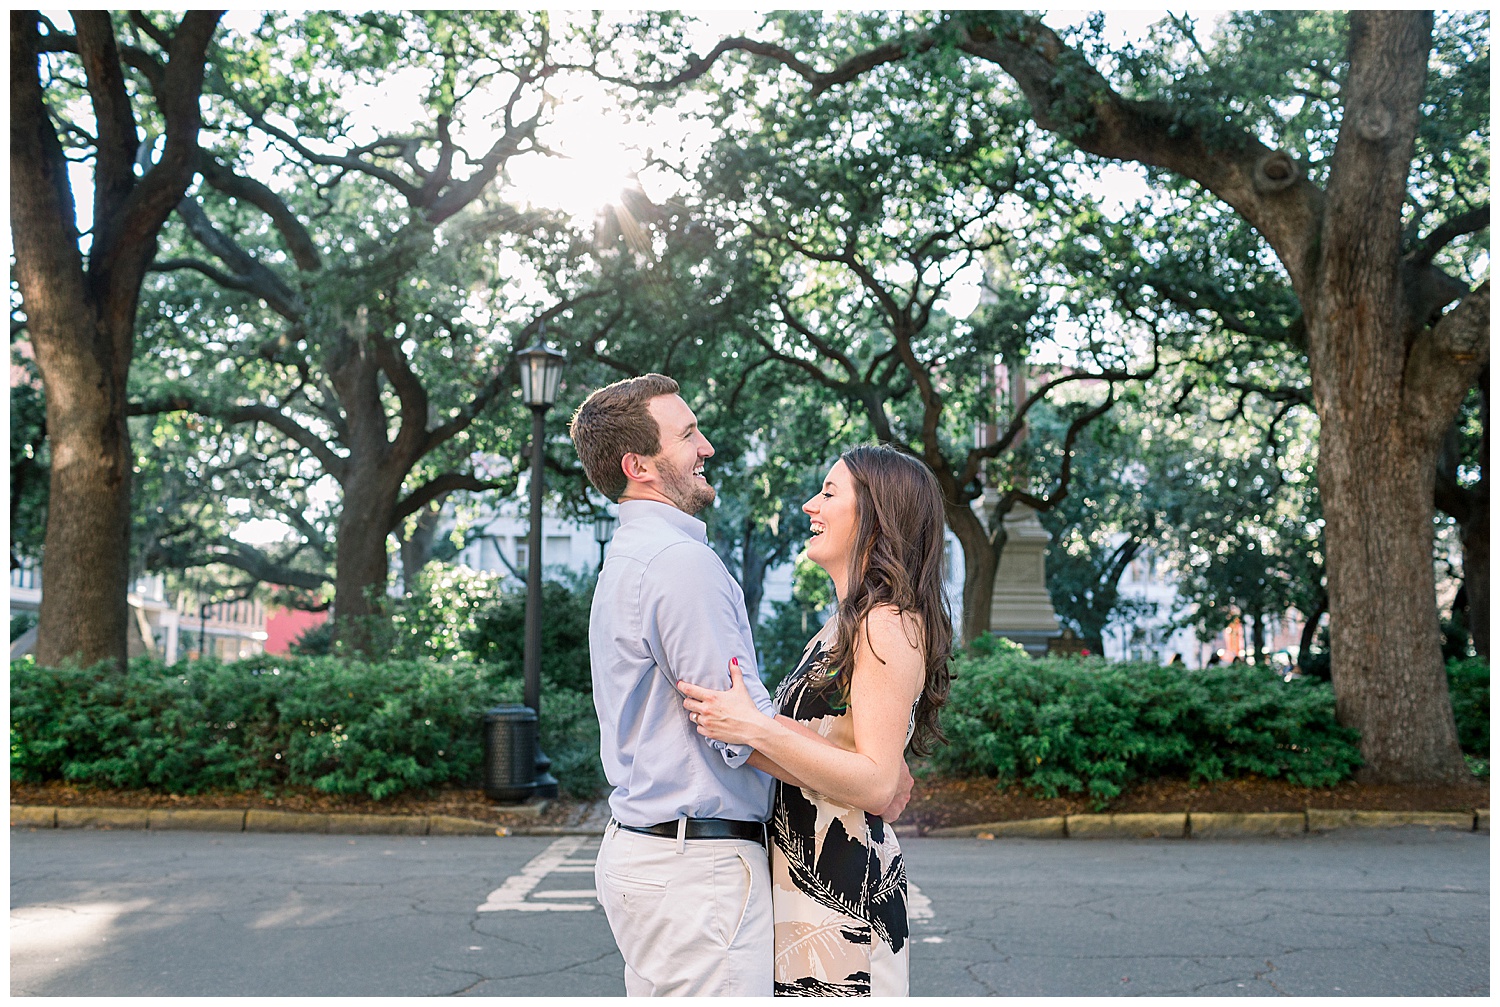 Engaged couple embracing on a Savannah, Georgia street.